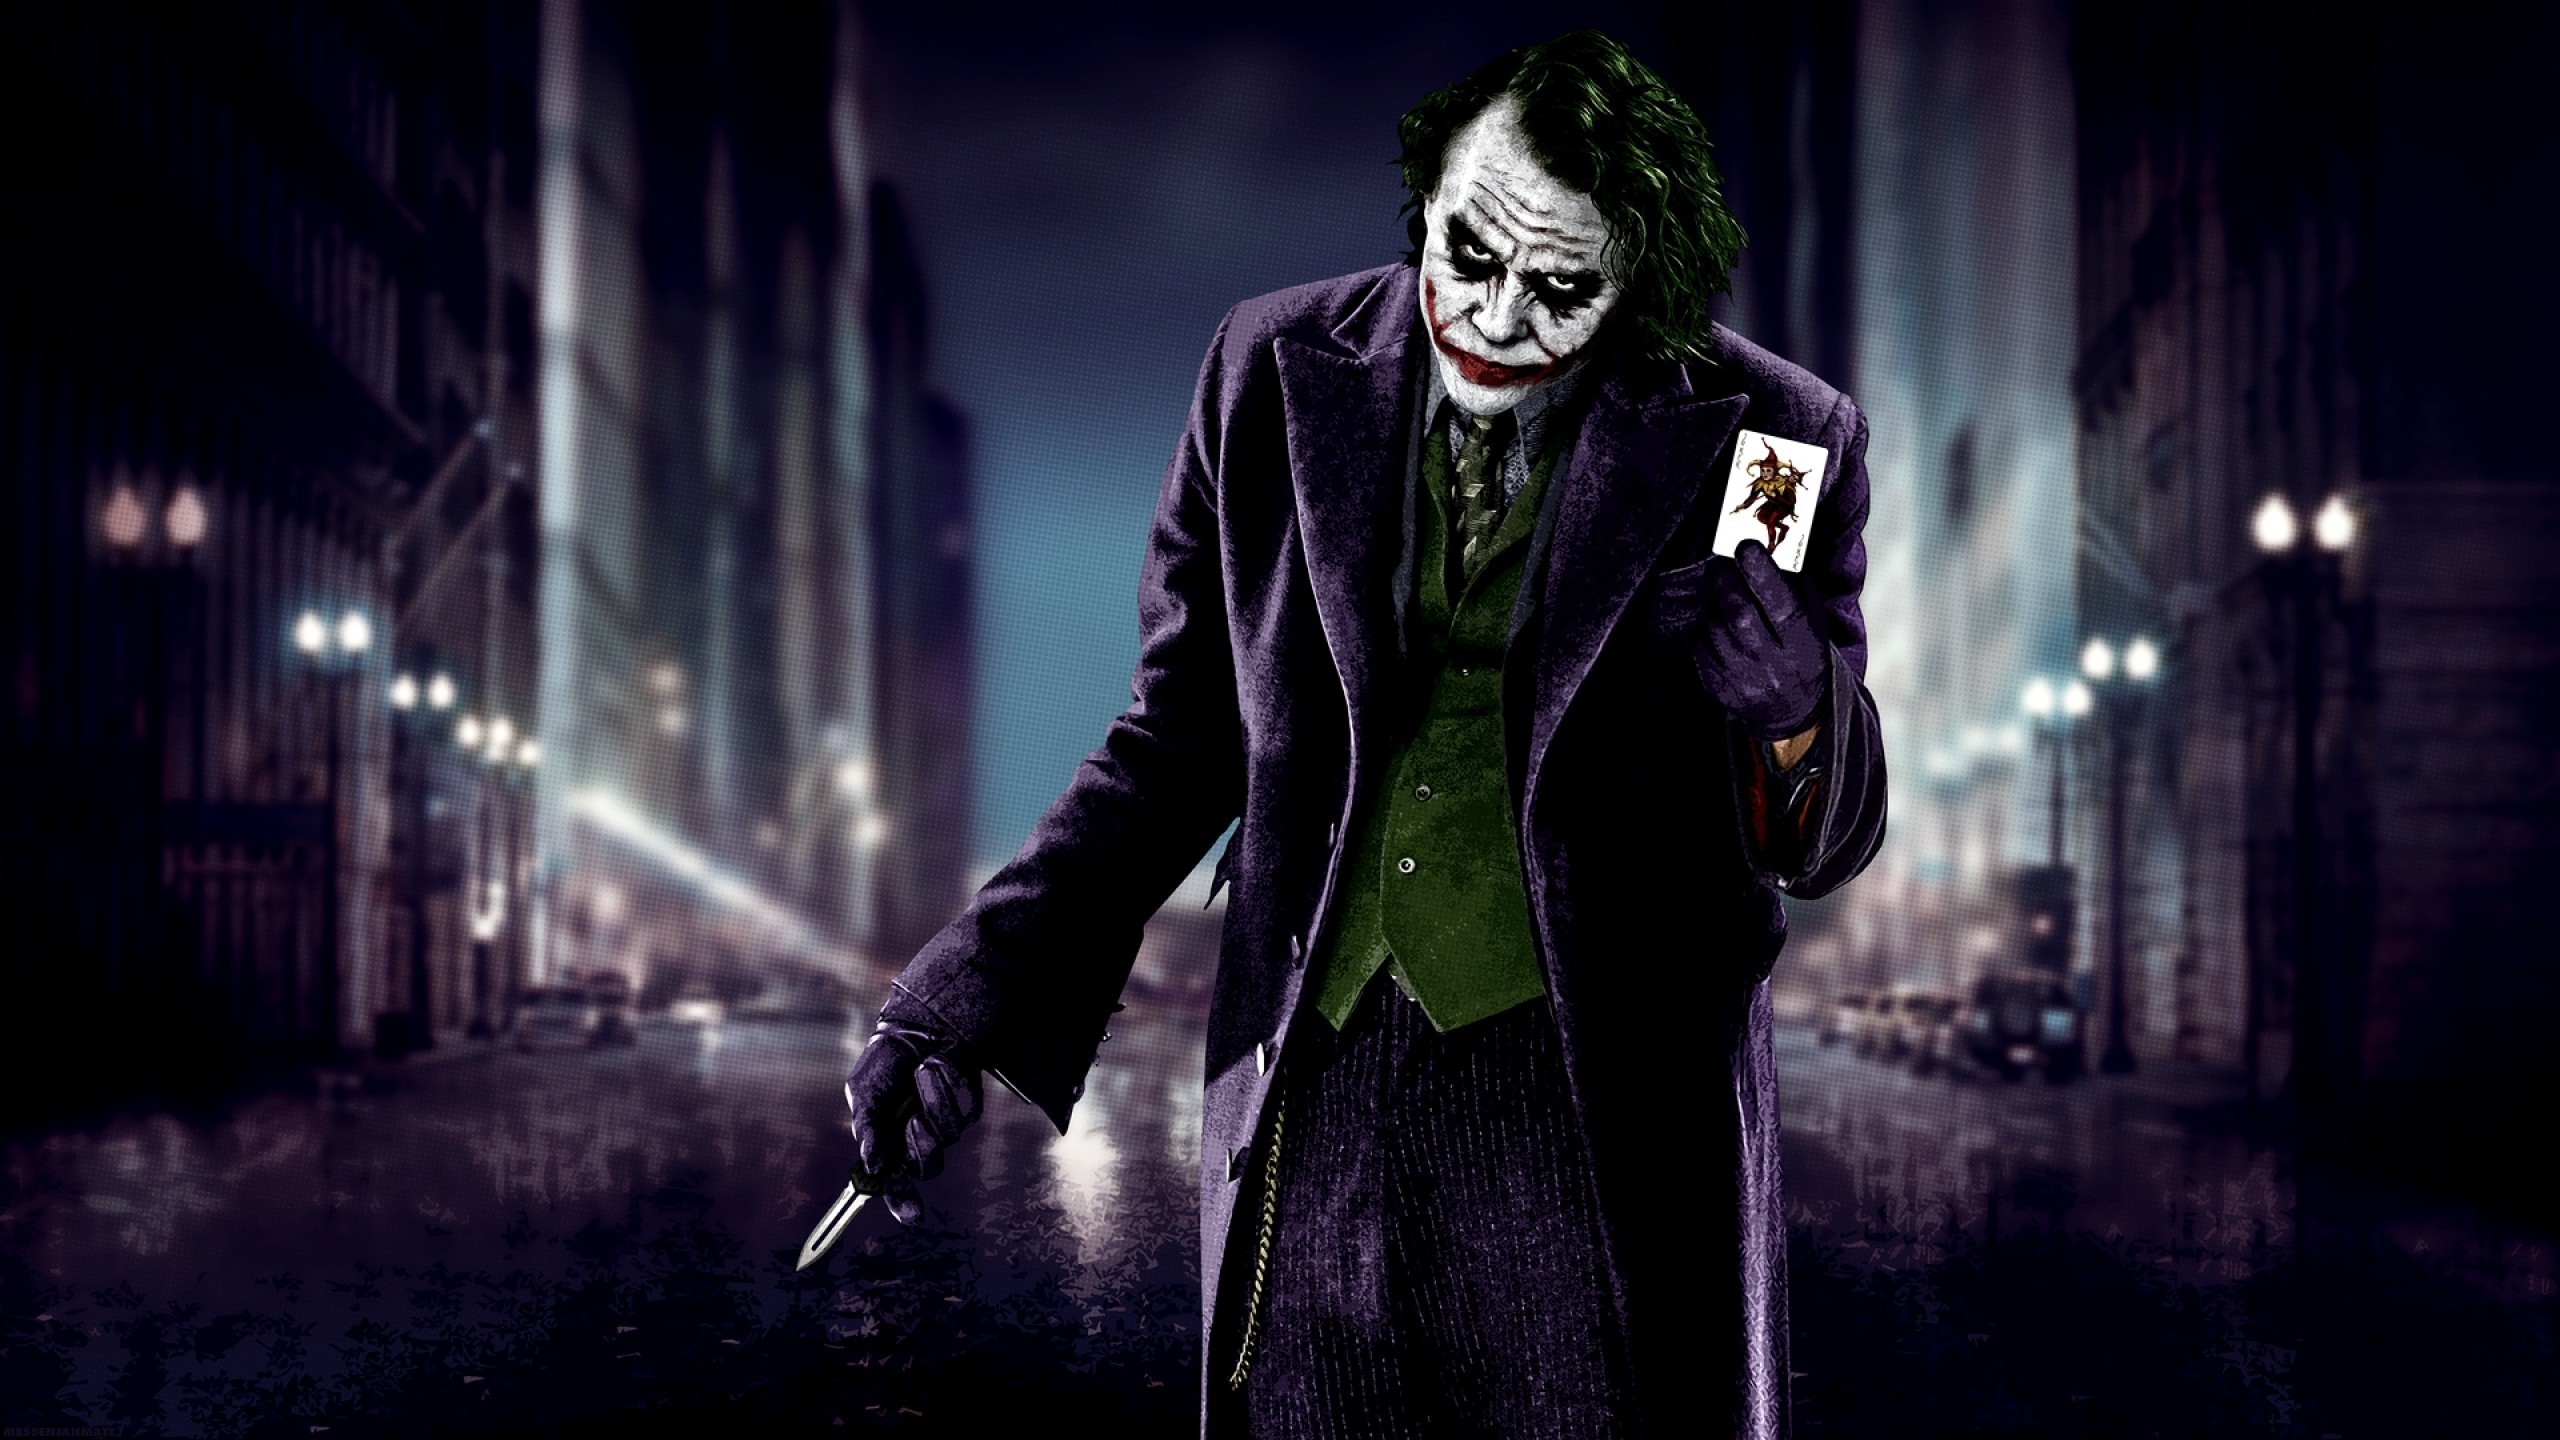 General 2560x1440 Joker The Dark Knight Heath Ledger movies villains Batman actor deceased DC Comics Warner Brothers Christopher Nolan